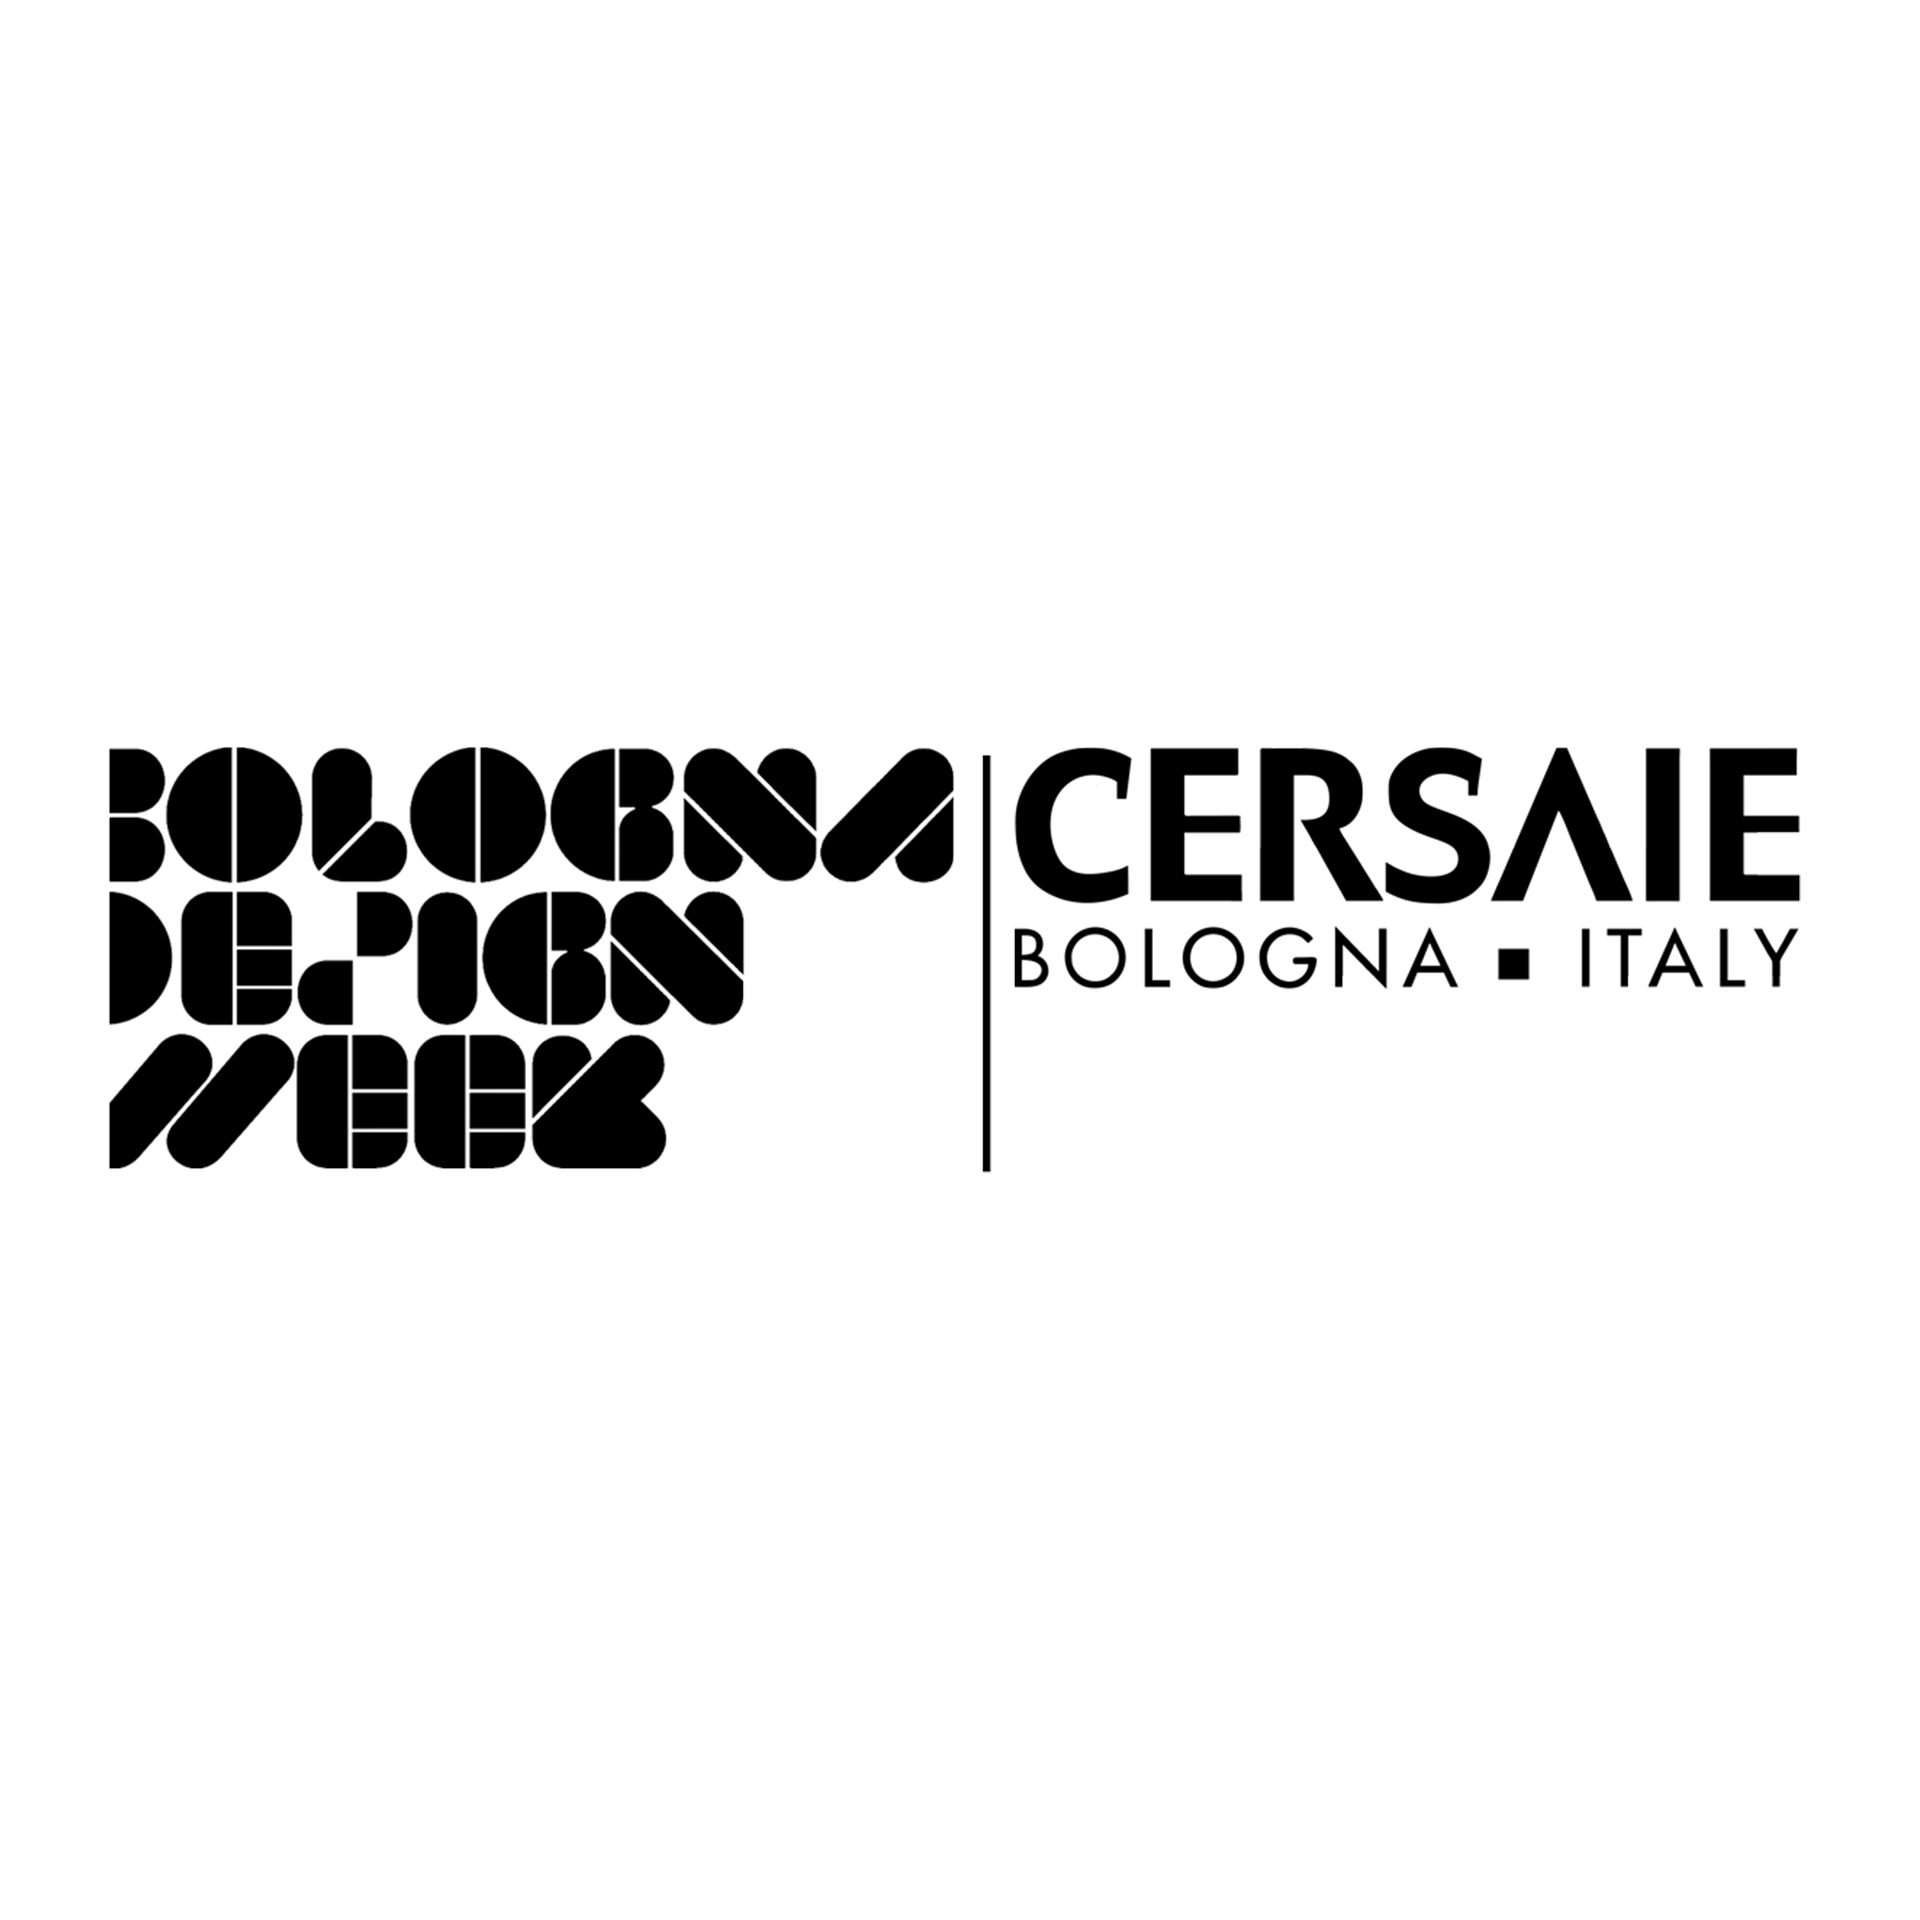 Oplàmp alla Bologna Design Week – Dynamo Velostazione